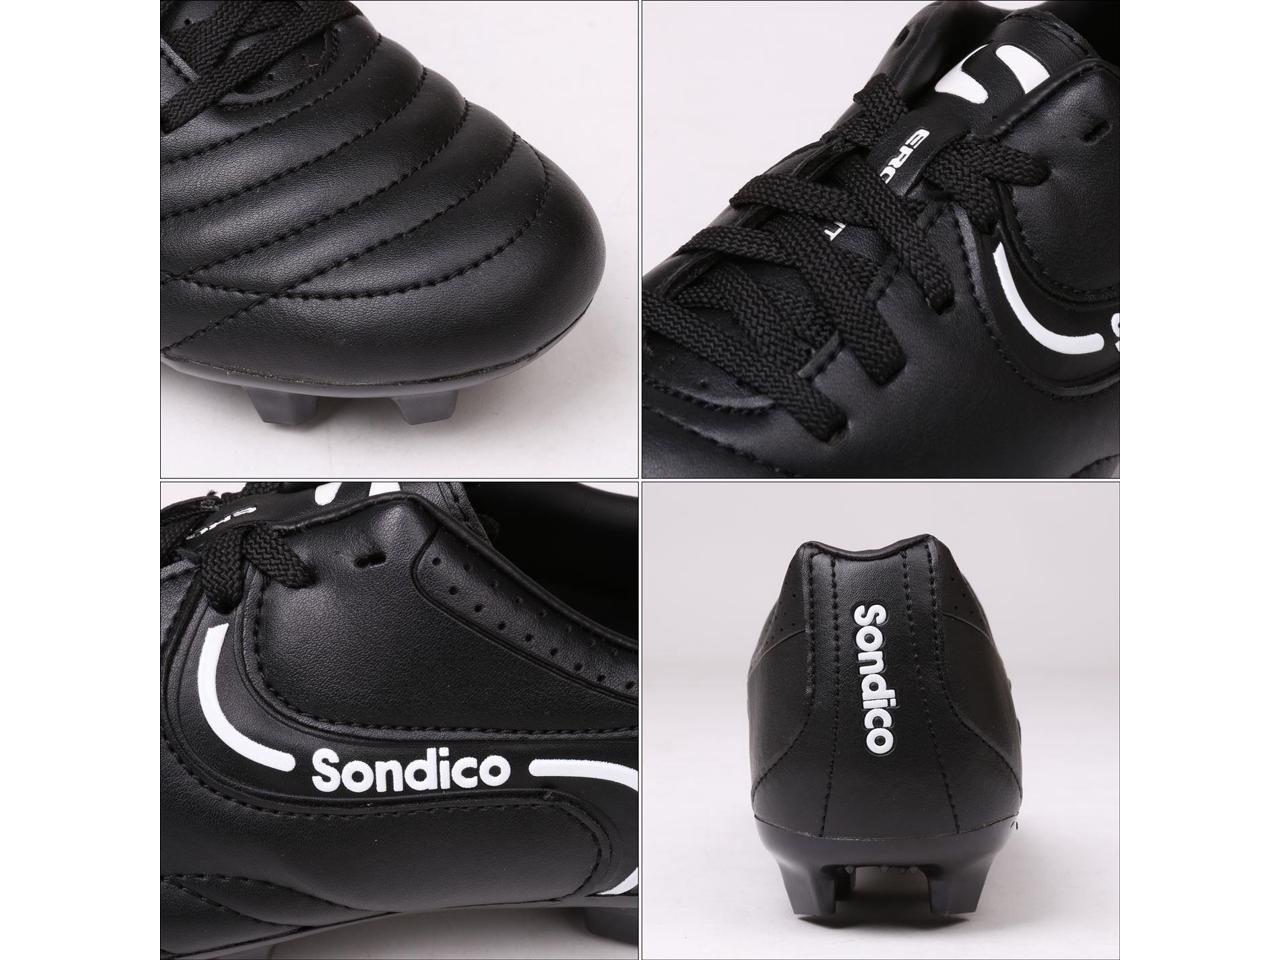 sondico football boots